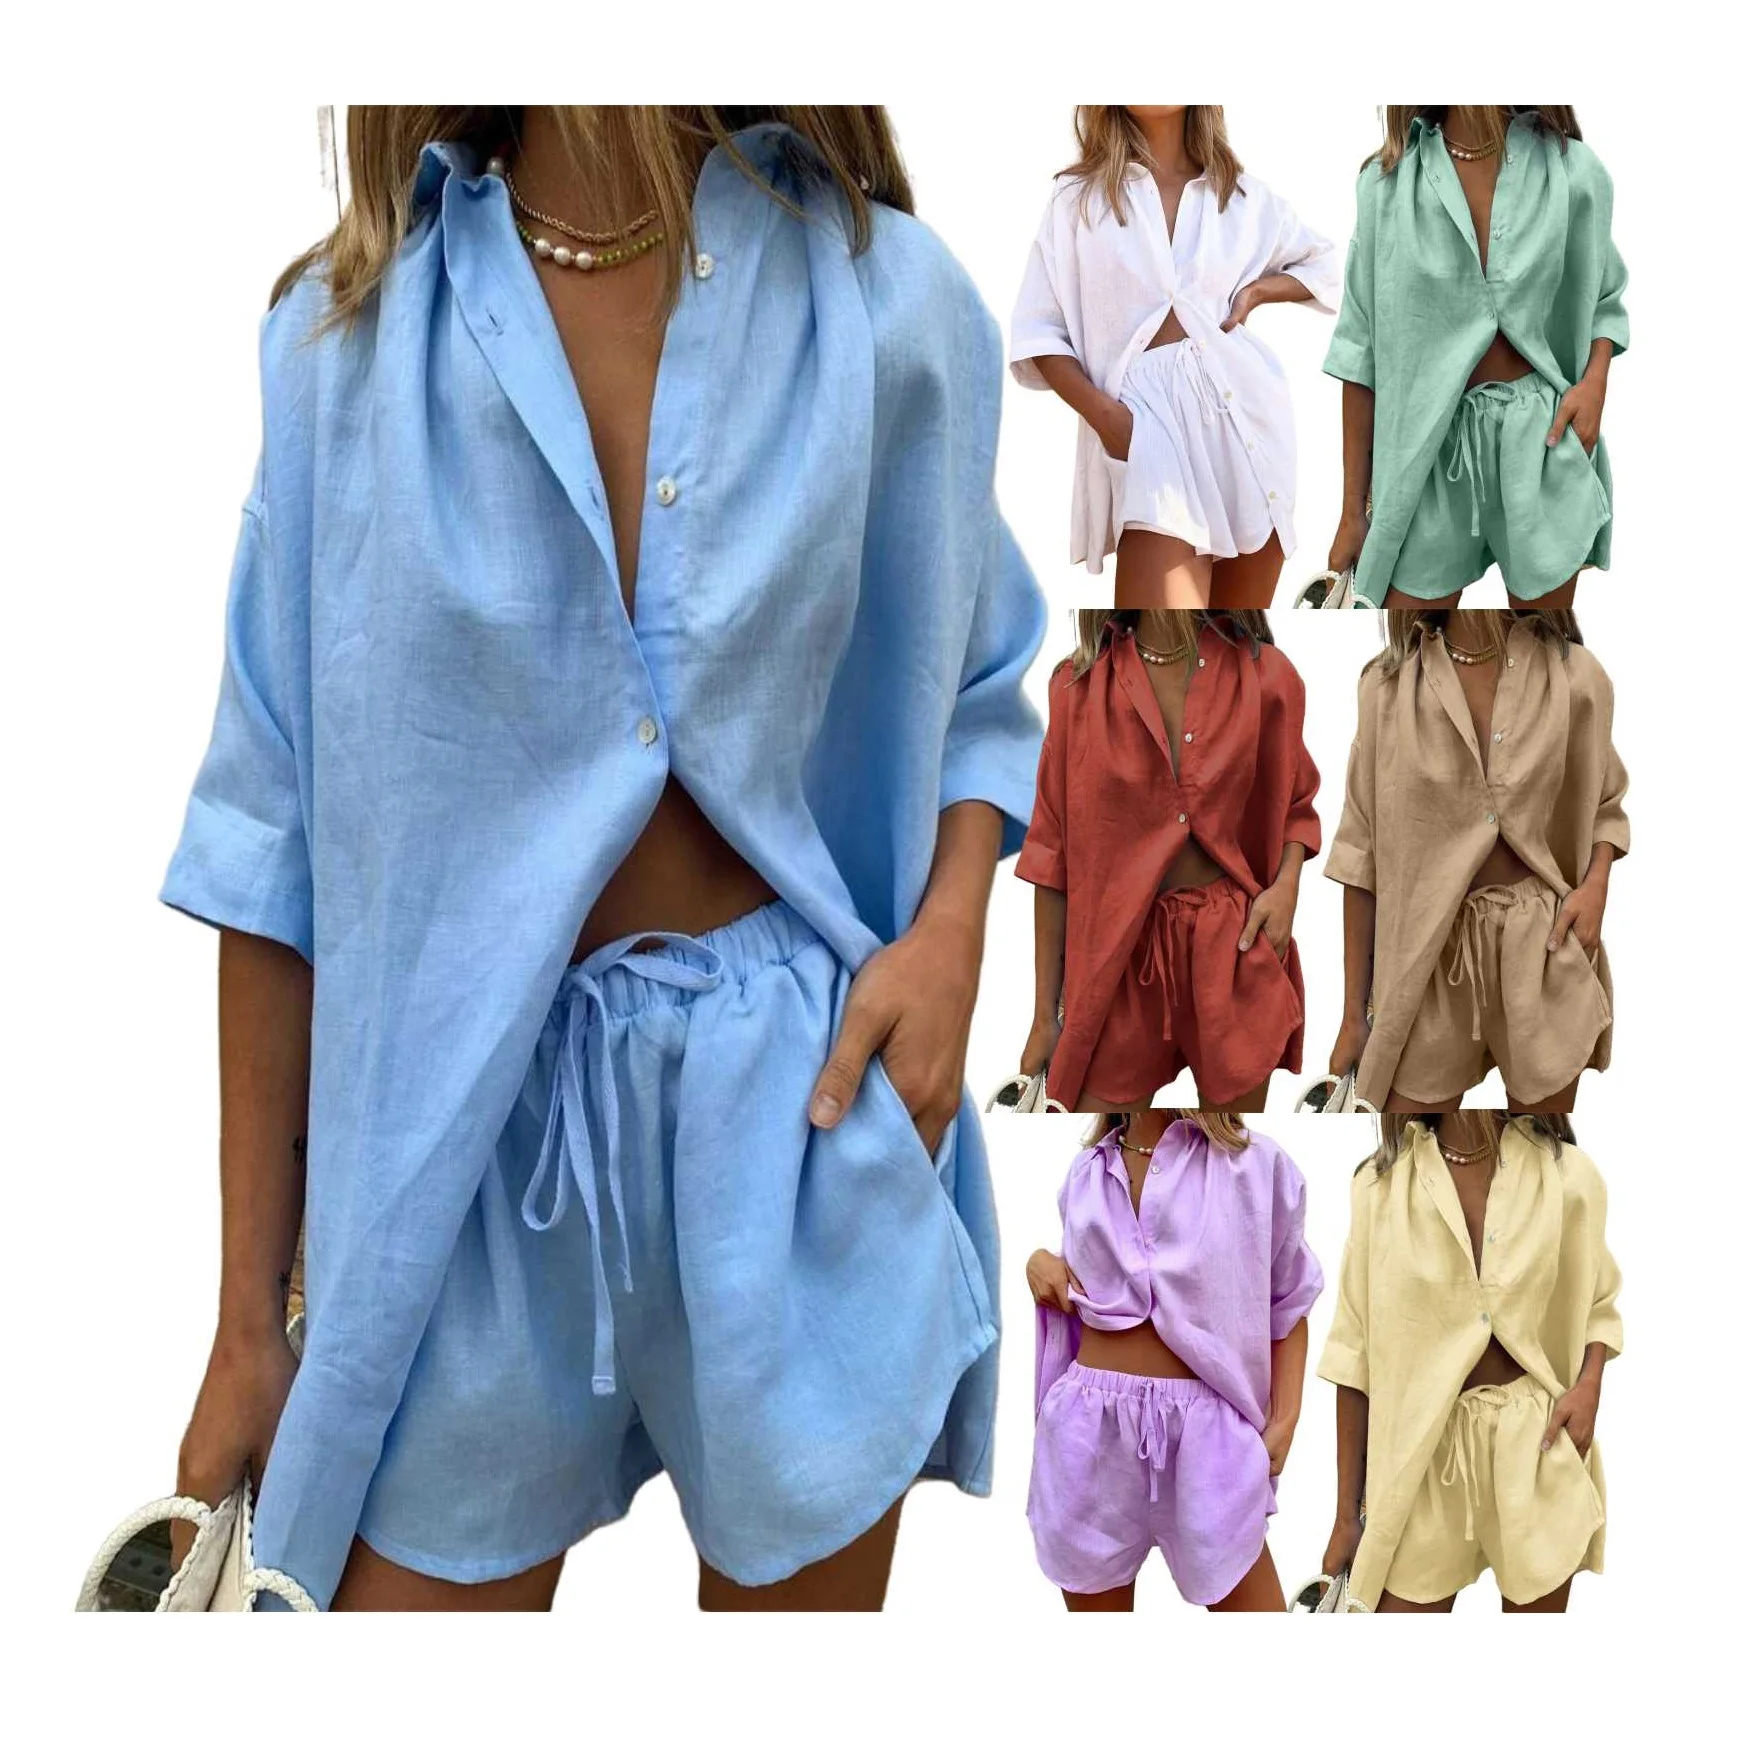 

RS029 2021 Summer Woman Plain Short Sleeve Women Clothing Casual Cotton 2 Piece Shorts Shirt Linen Set, As shown in the figure